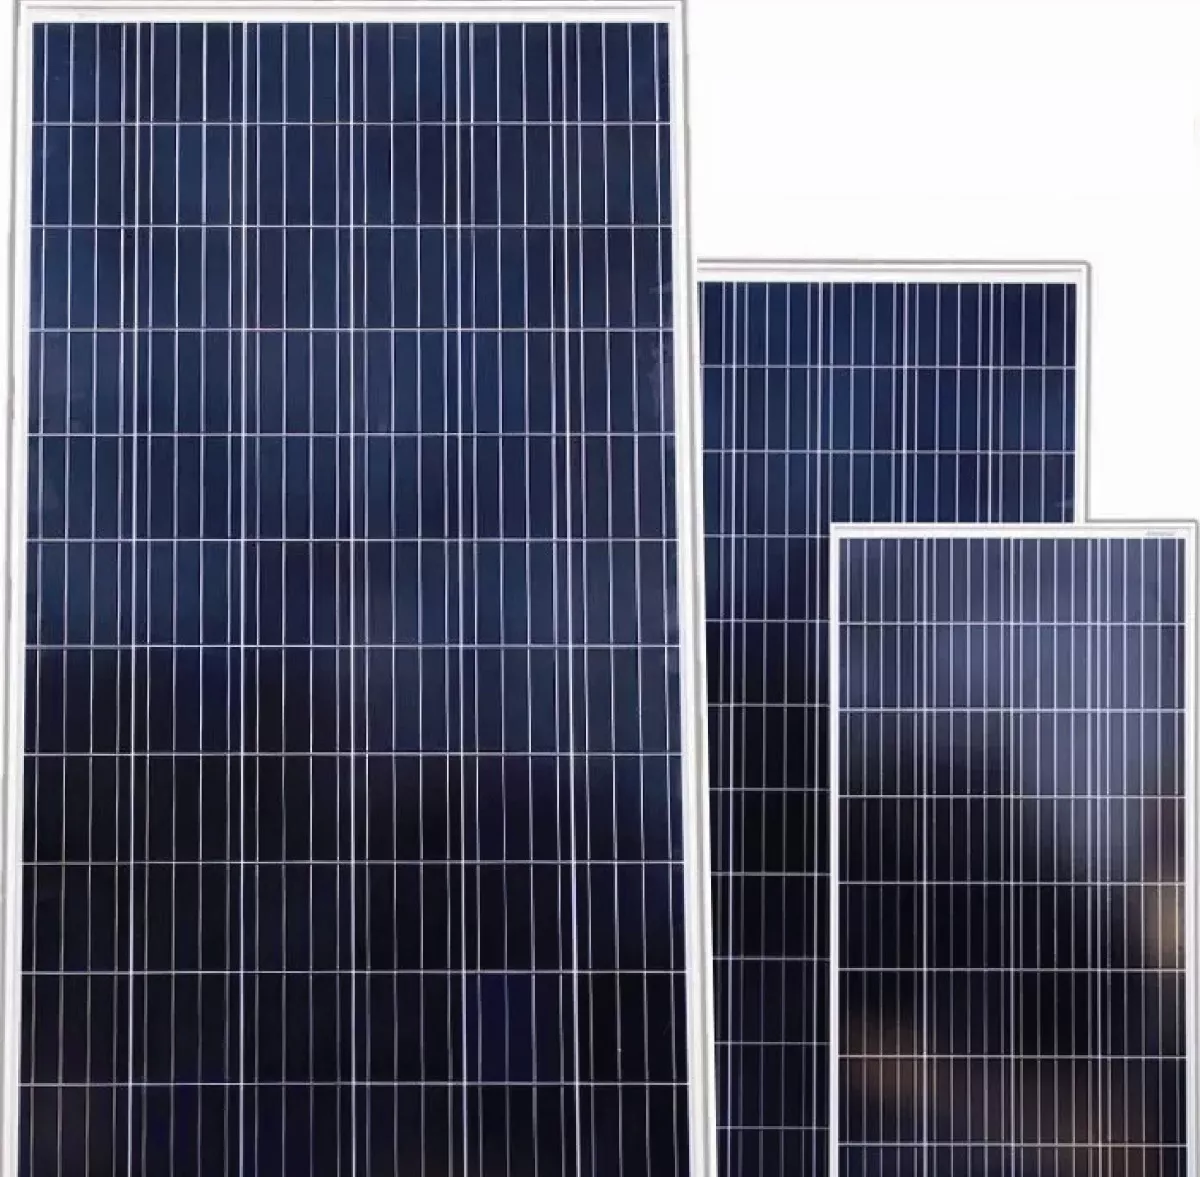 Tercera imagen para búsqueda de paneles solares